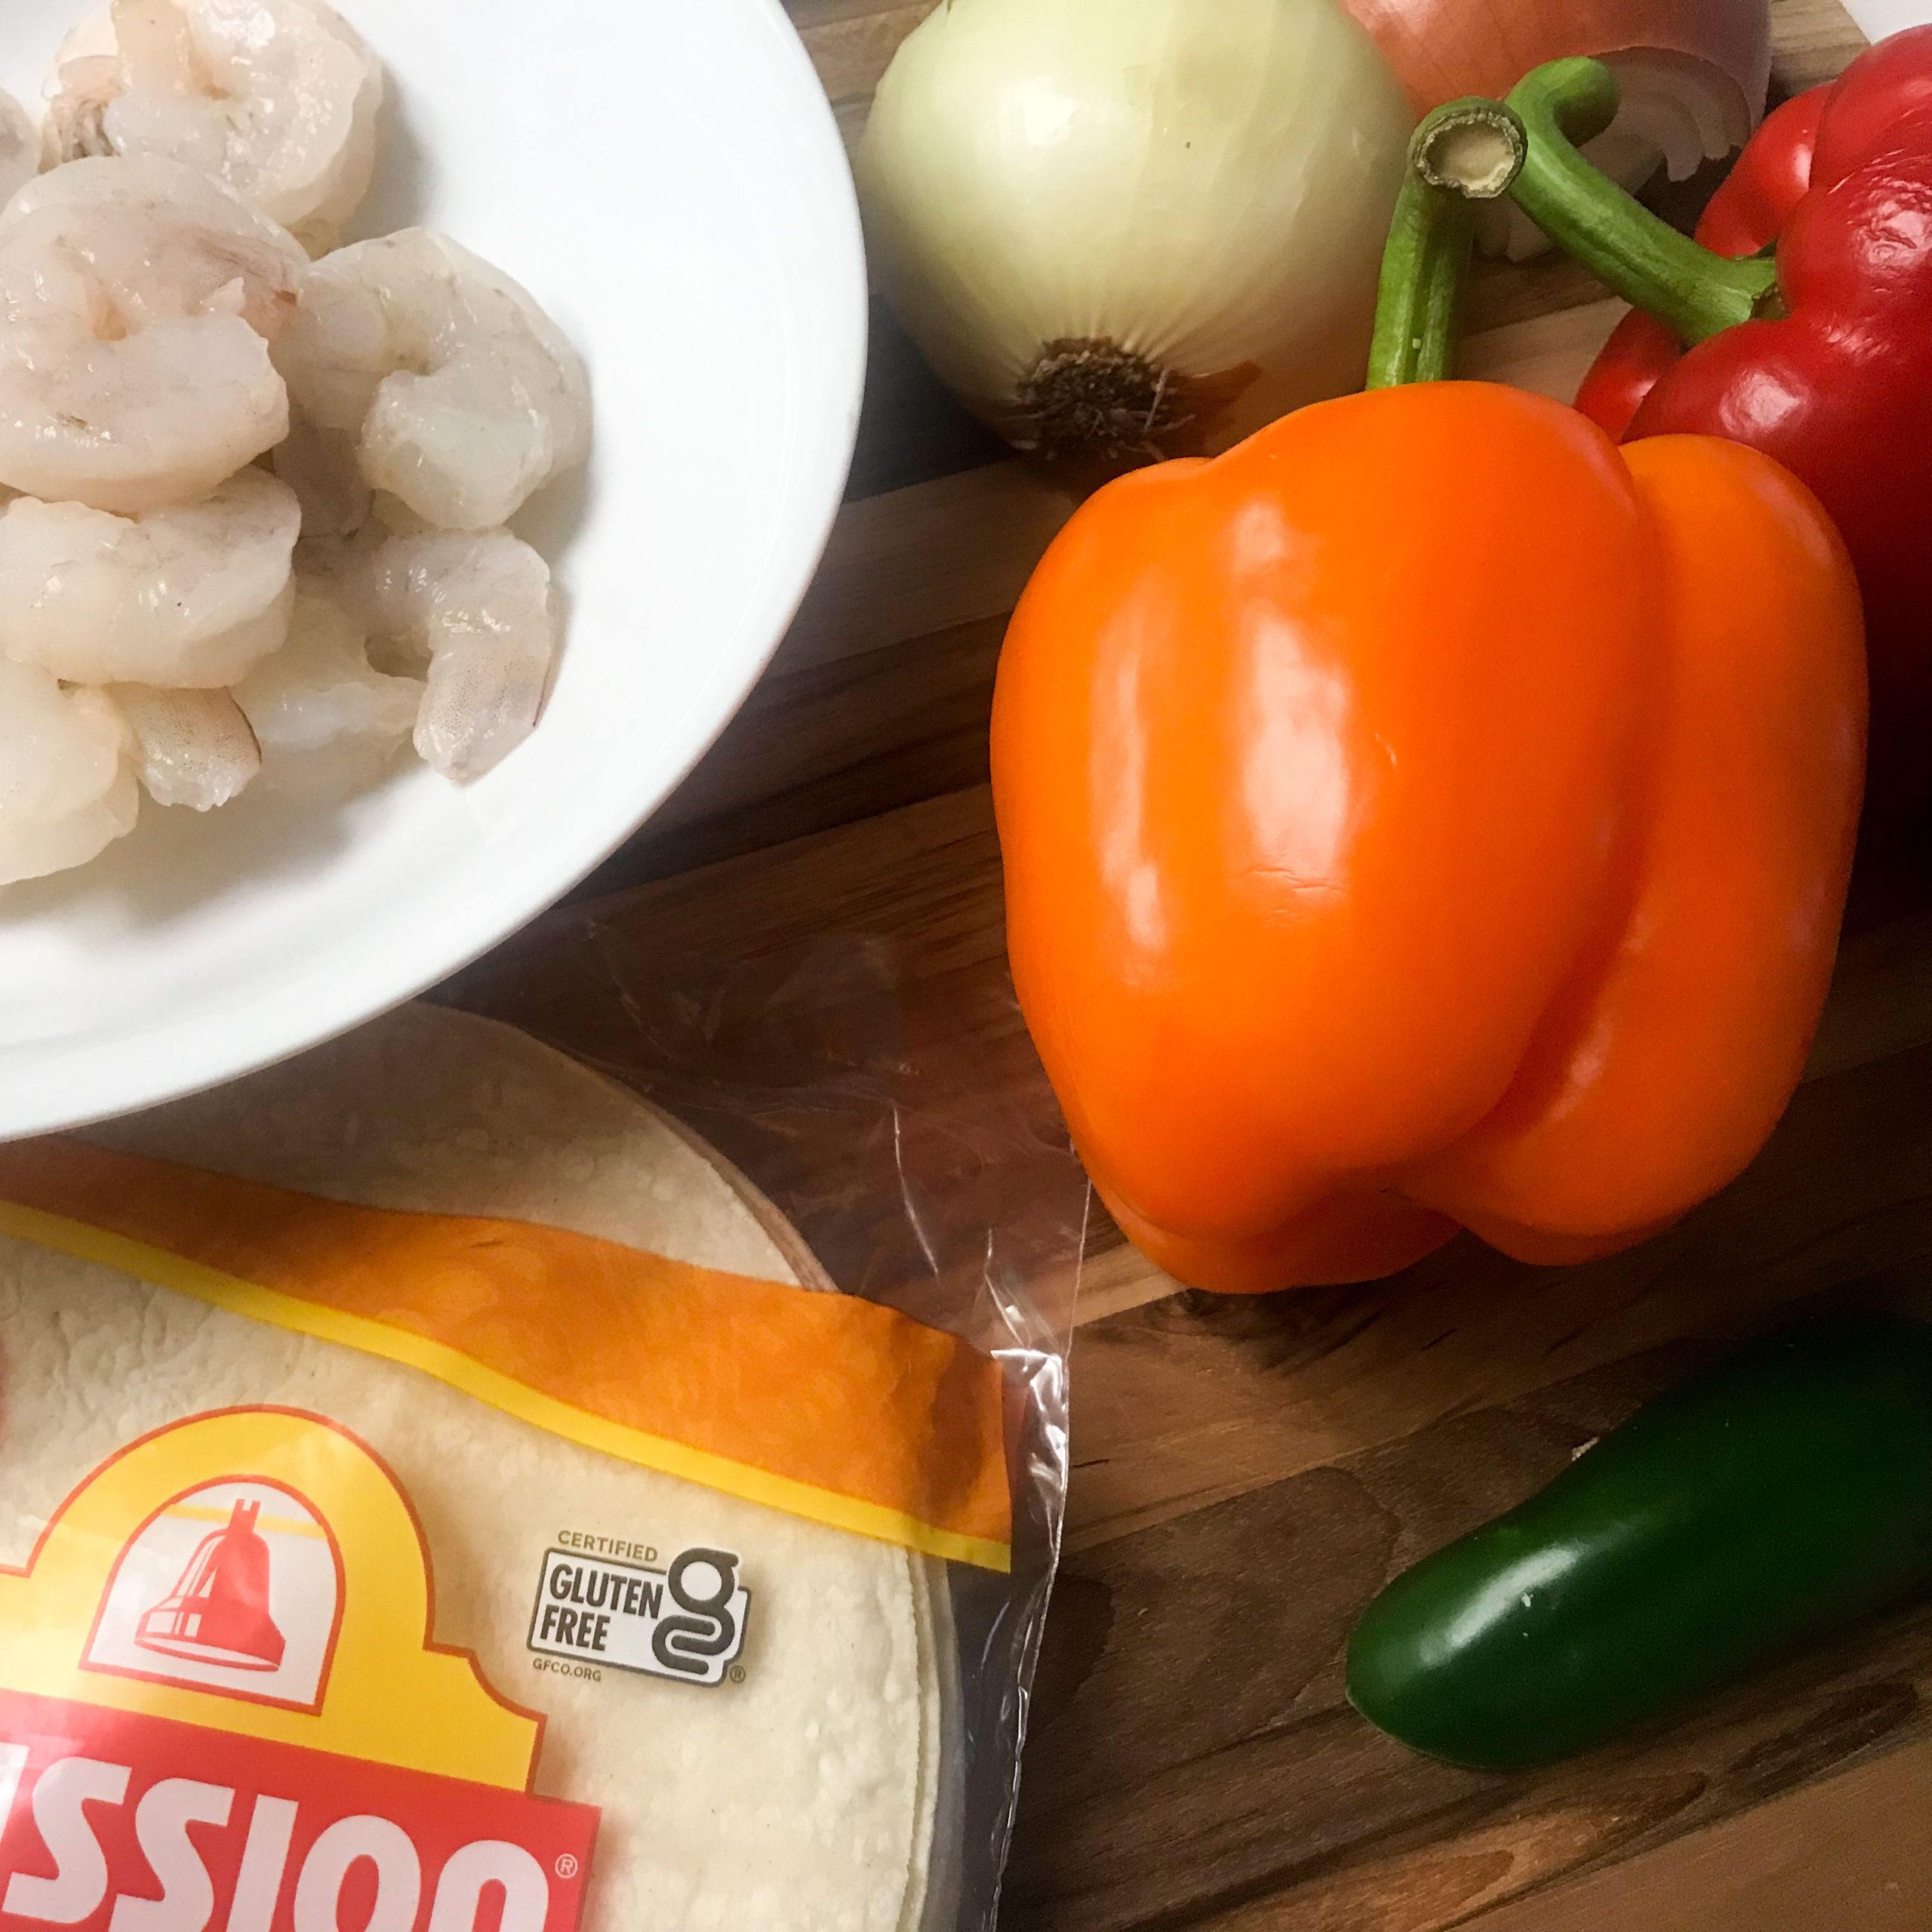 ingredients for shrimp fajitas on the kitchen counter